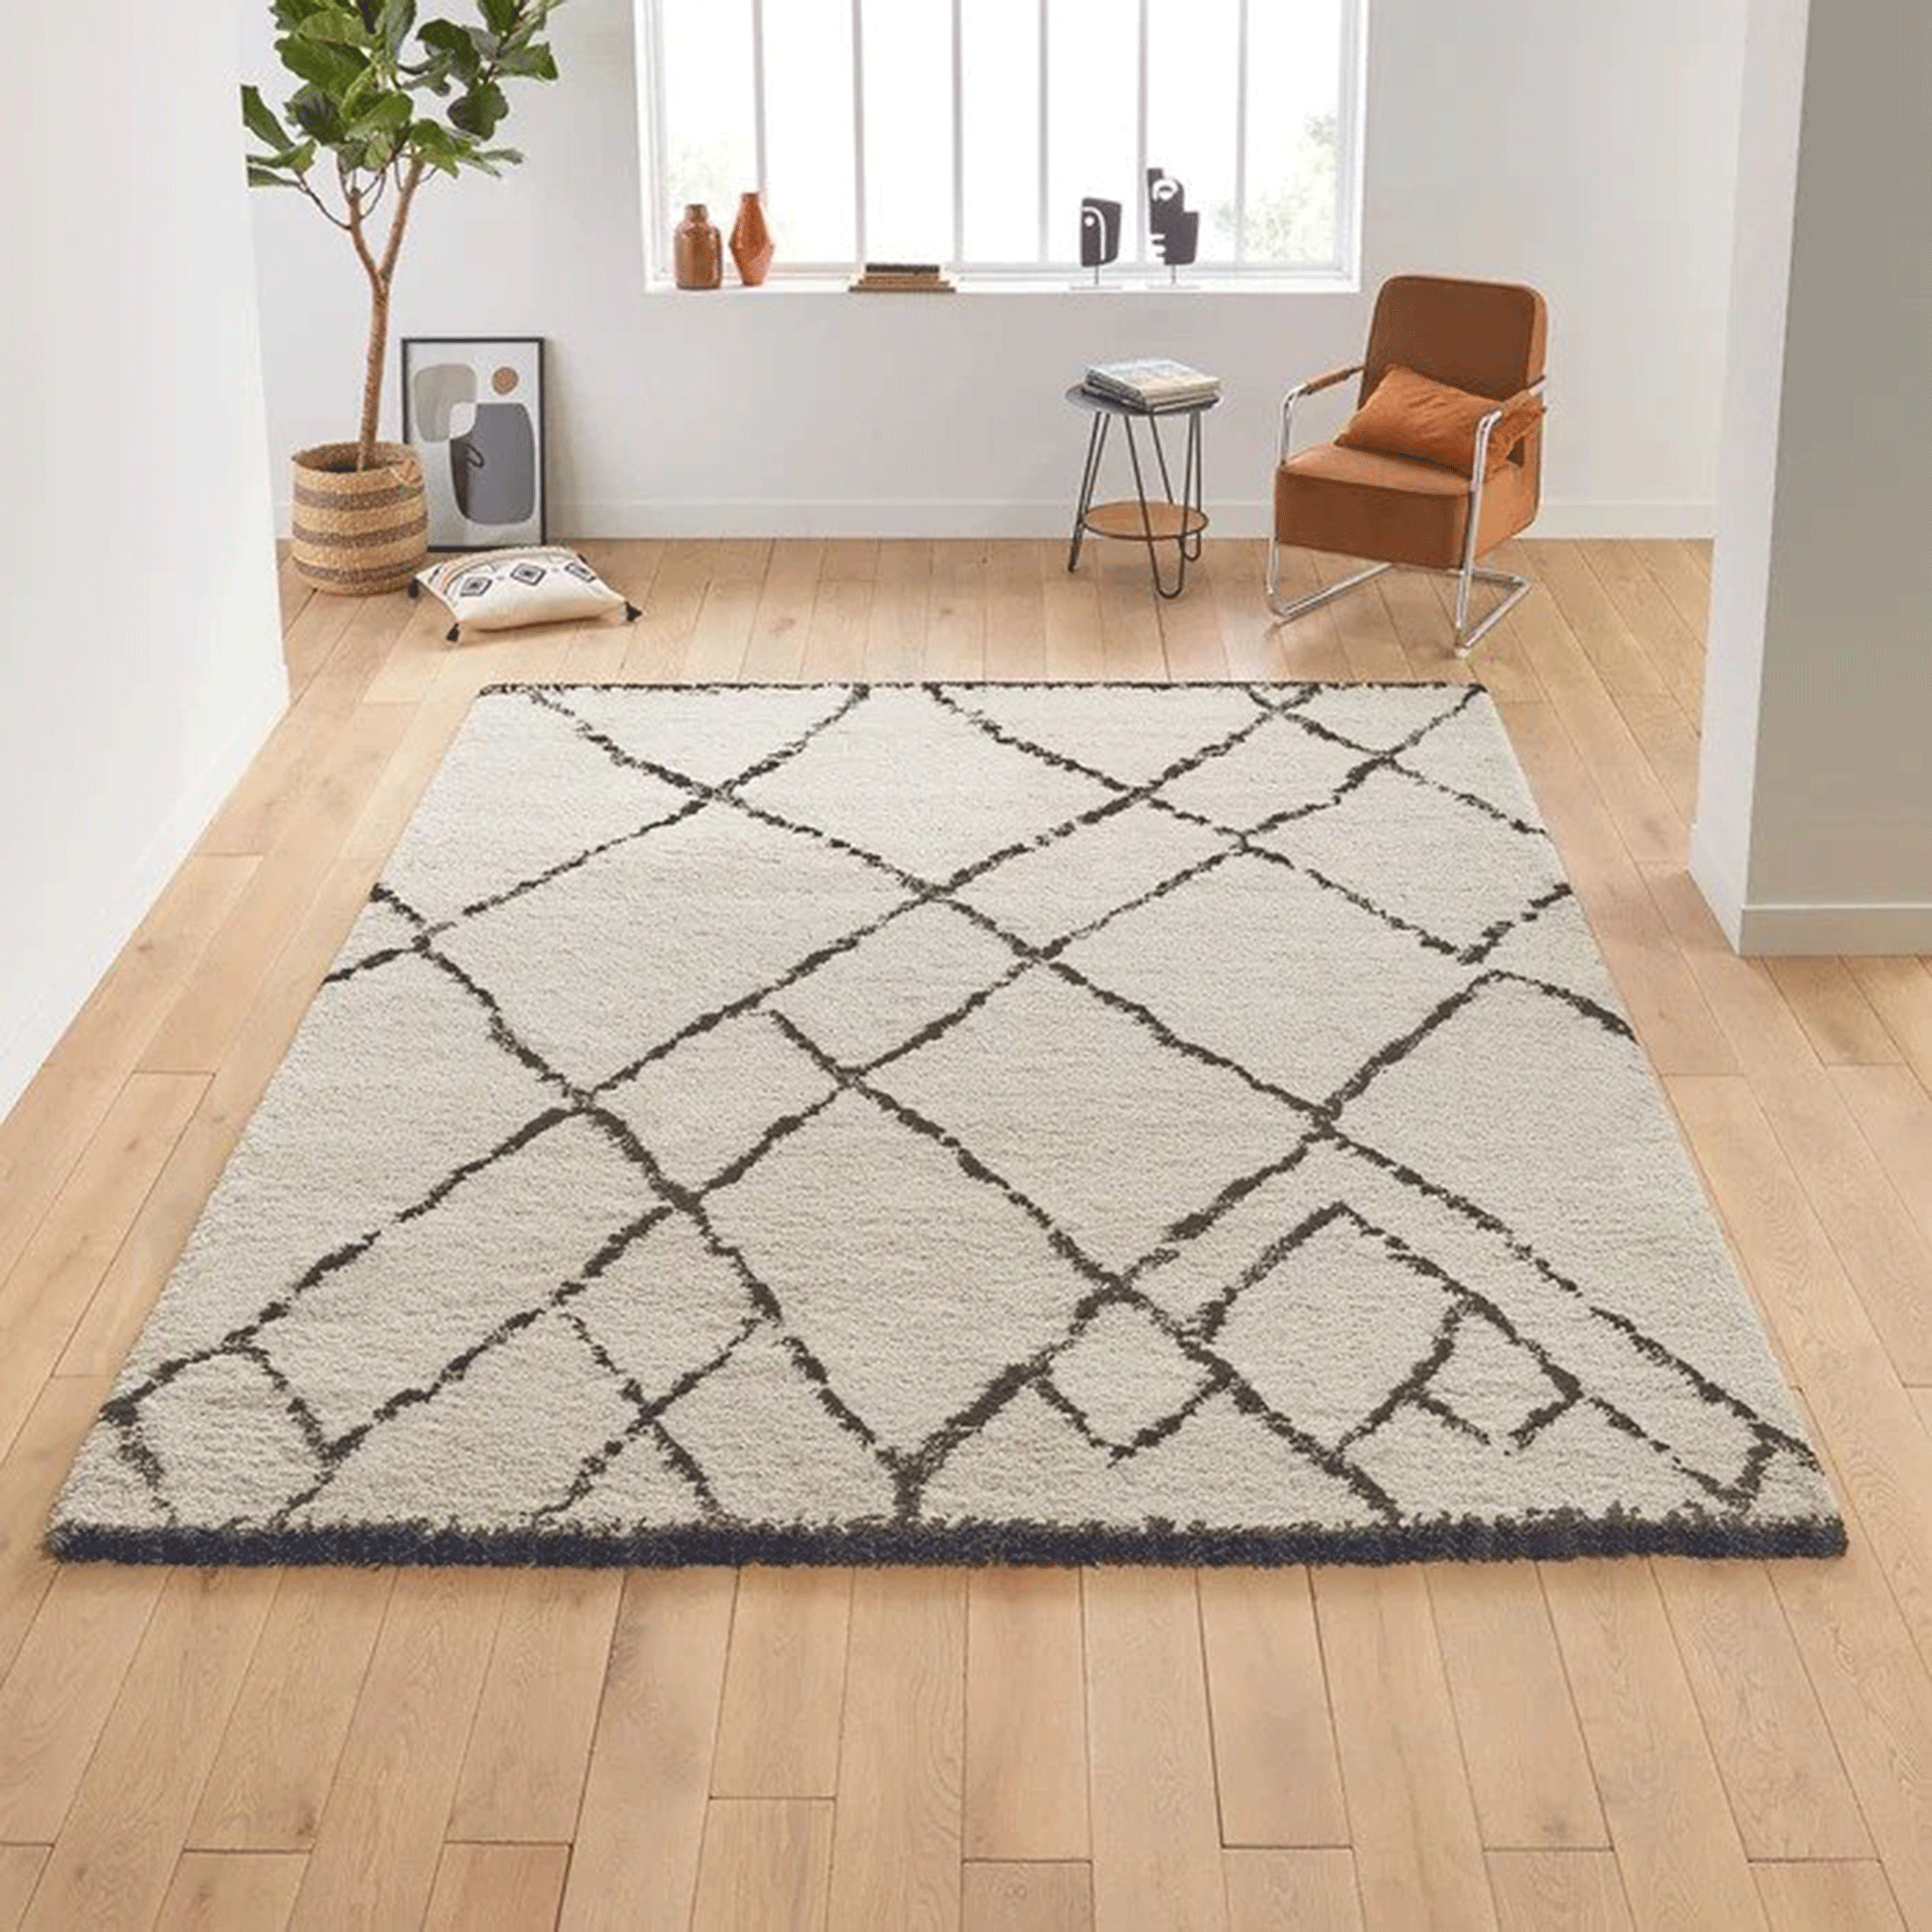 Berber rug with white sofa